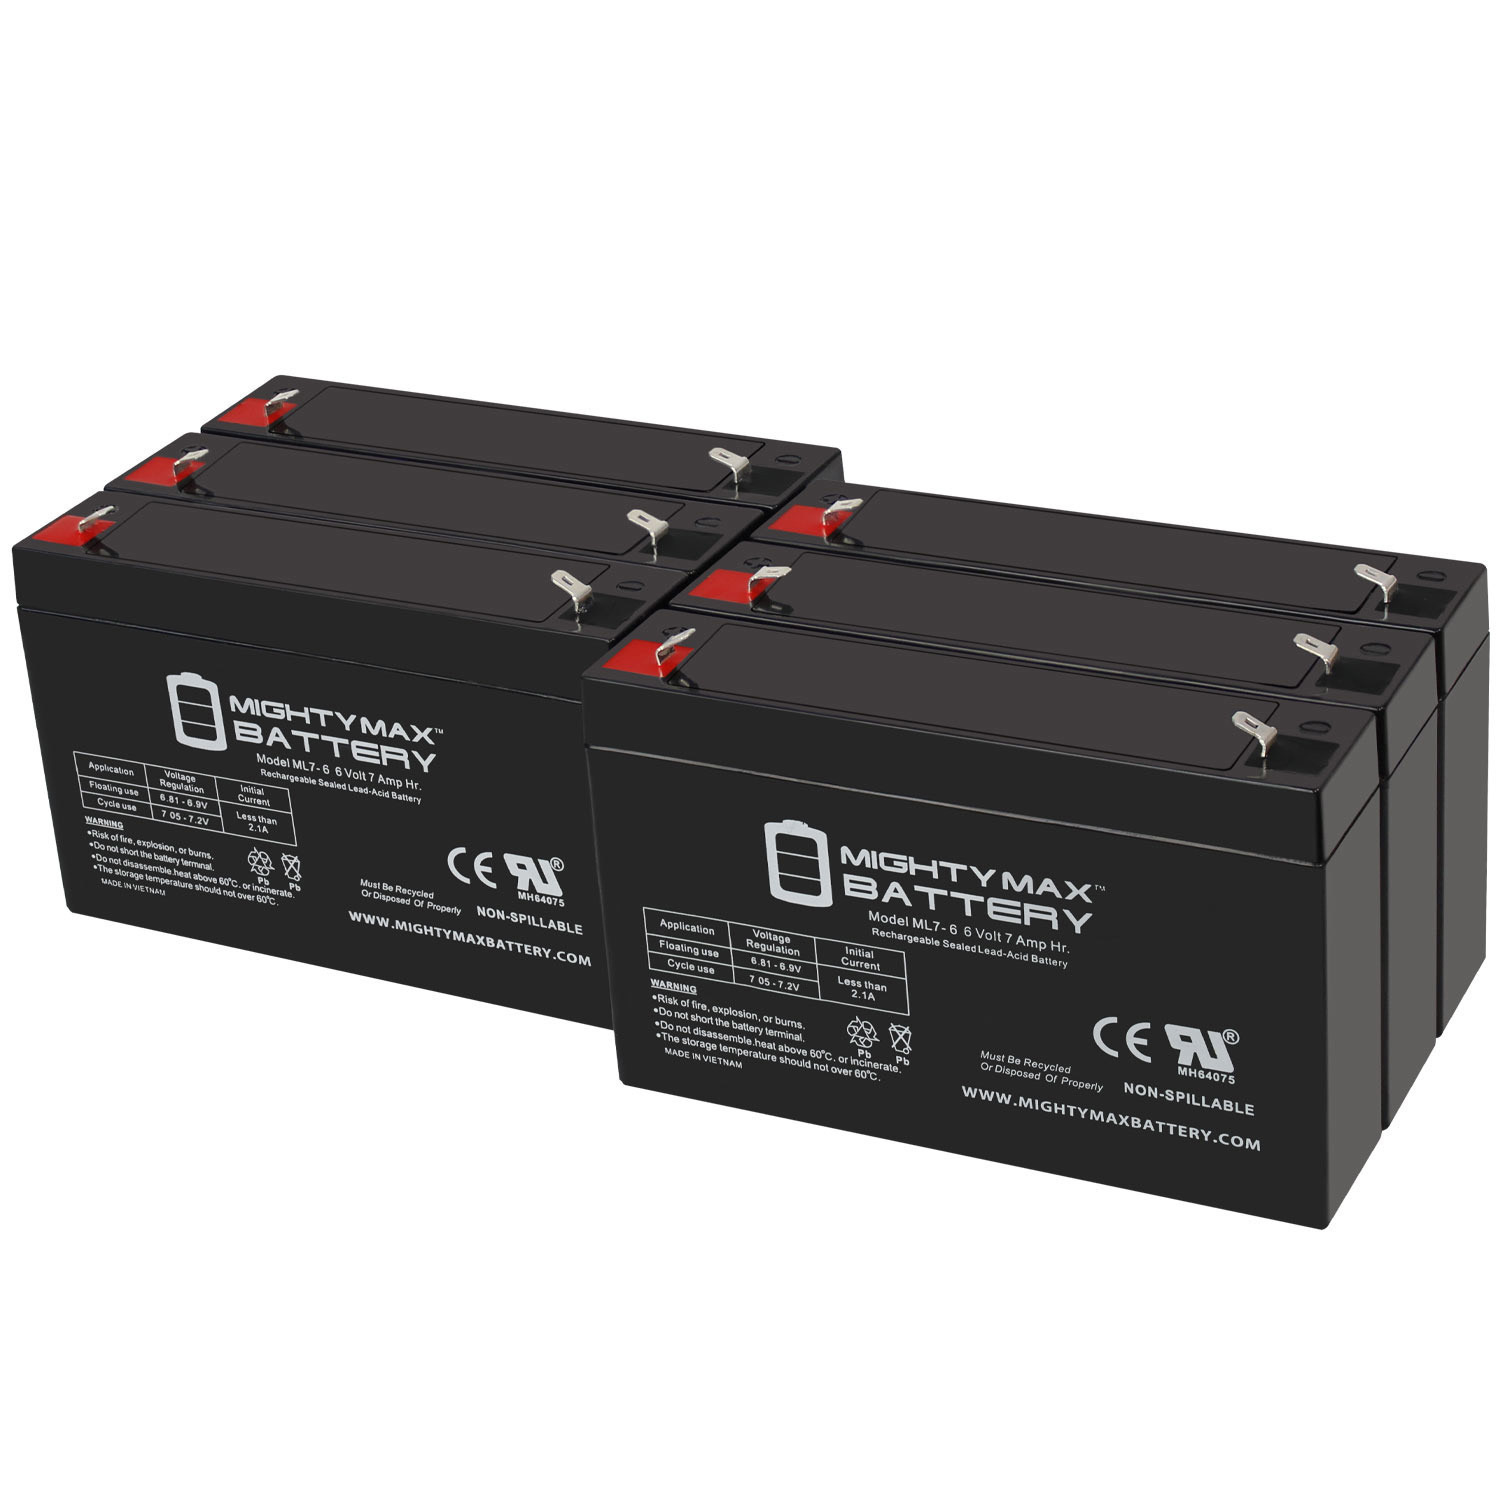 6V 7Ah SLA Replacement Battery for Elan ST2 - 6 Pack